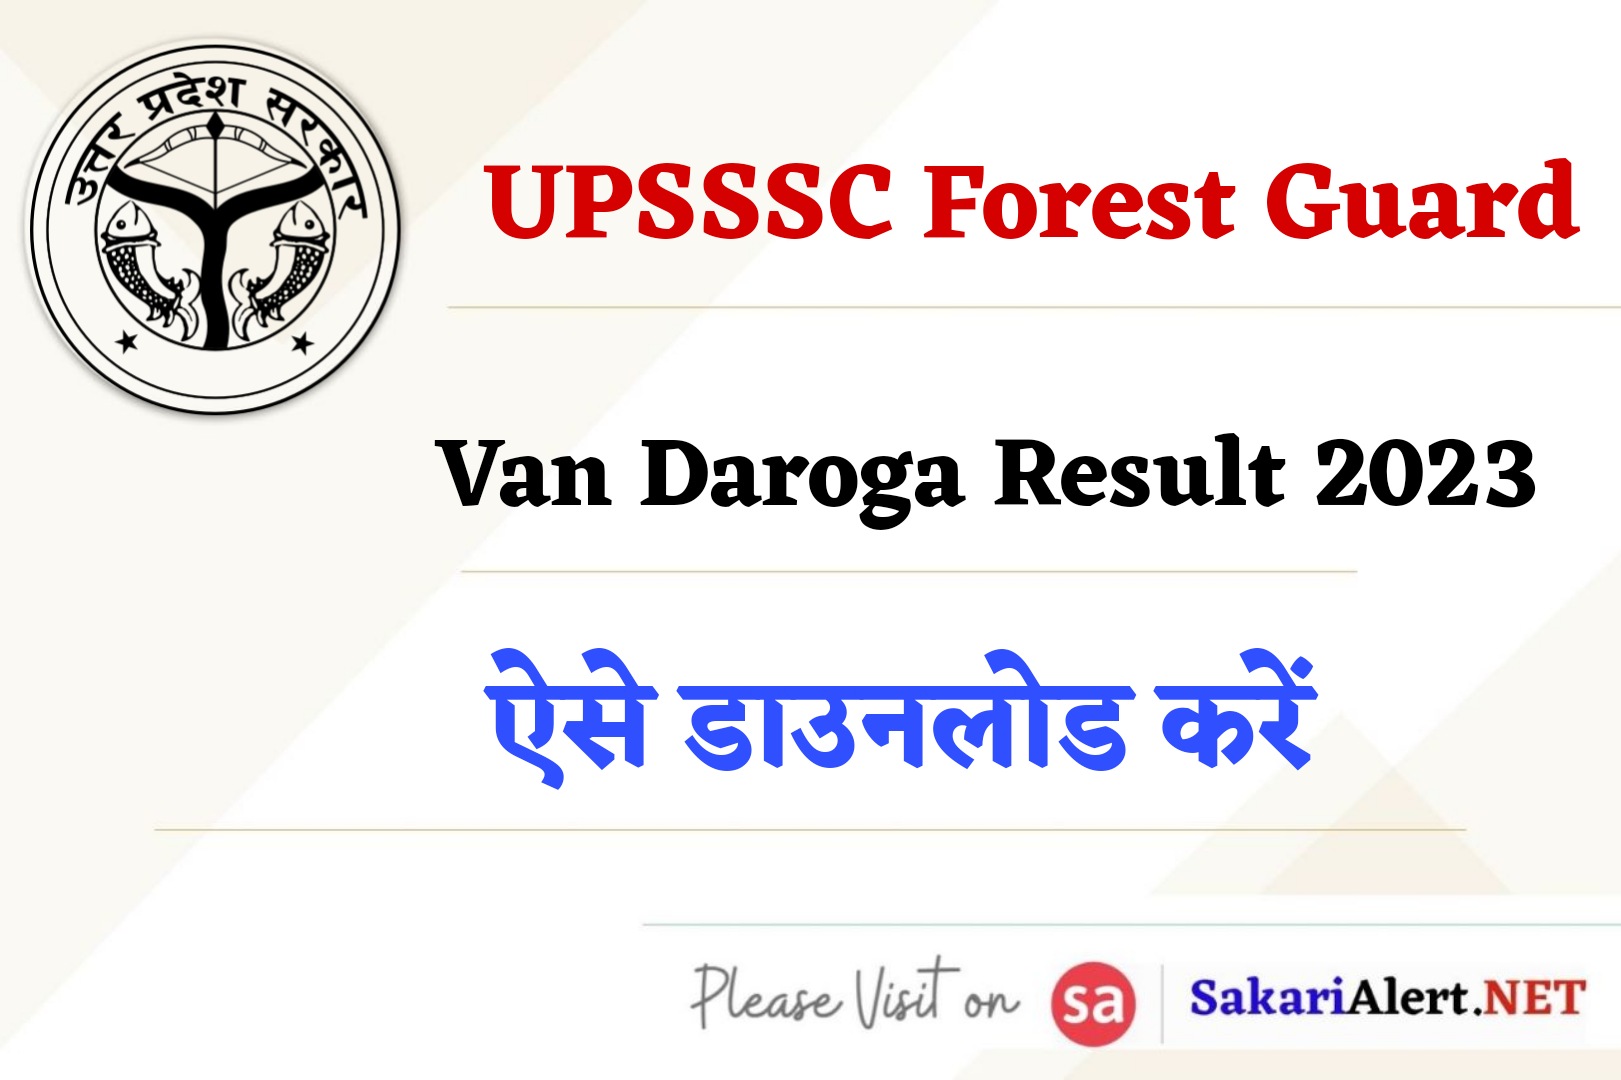 UPSSSC Forest Guard Van Daroga Result 2023